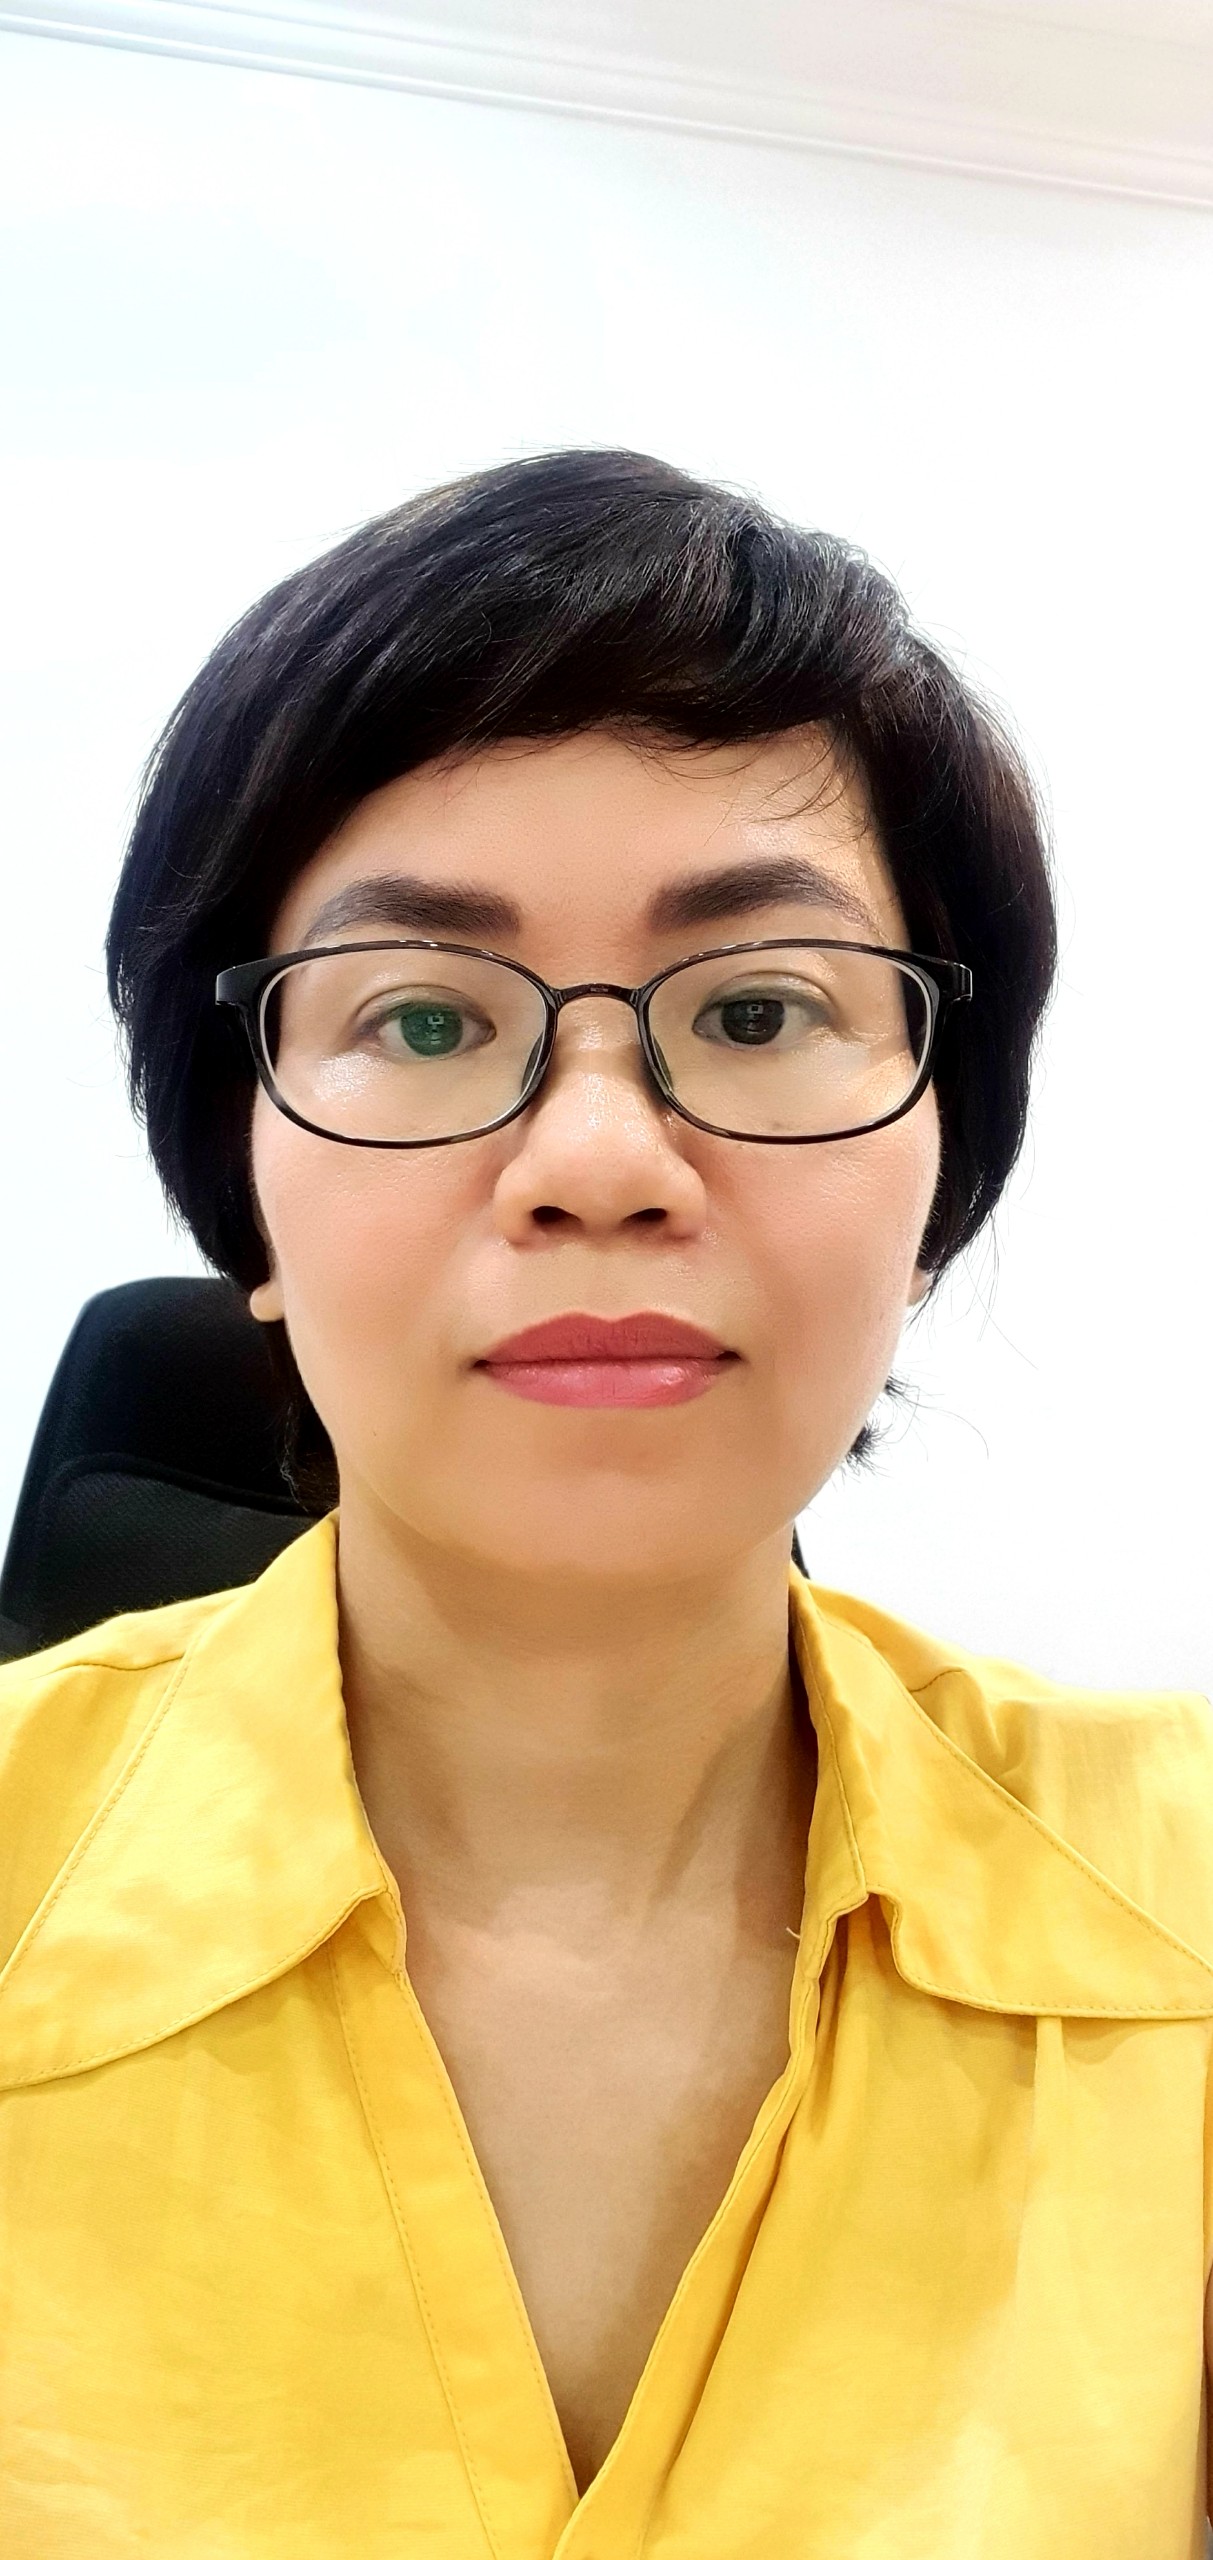 Ms. Nguyen Thi Thanh Mai